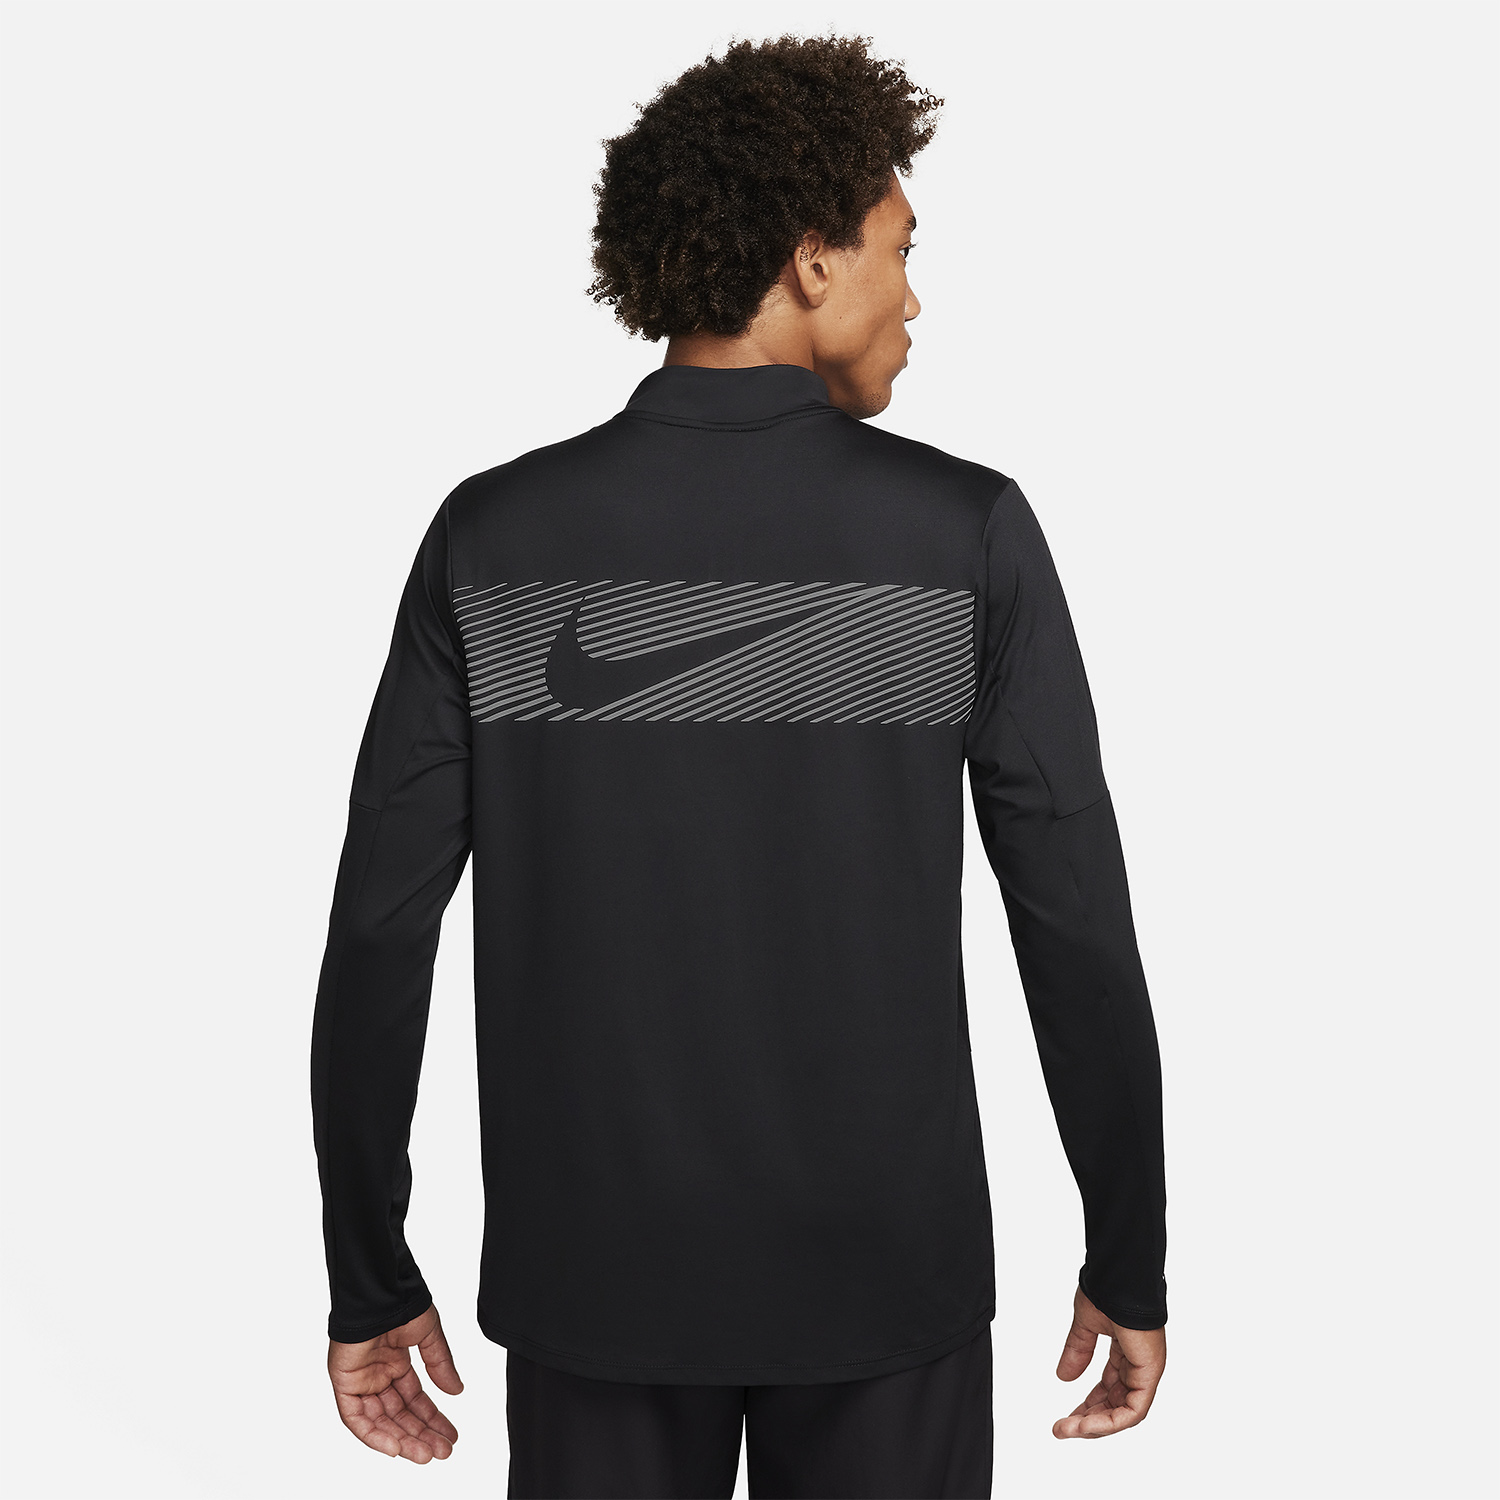 Nike Element Flash Men's Running Shirt - Black/Reflective Silver